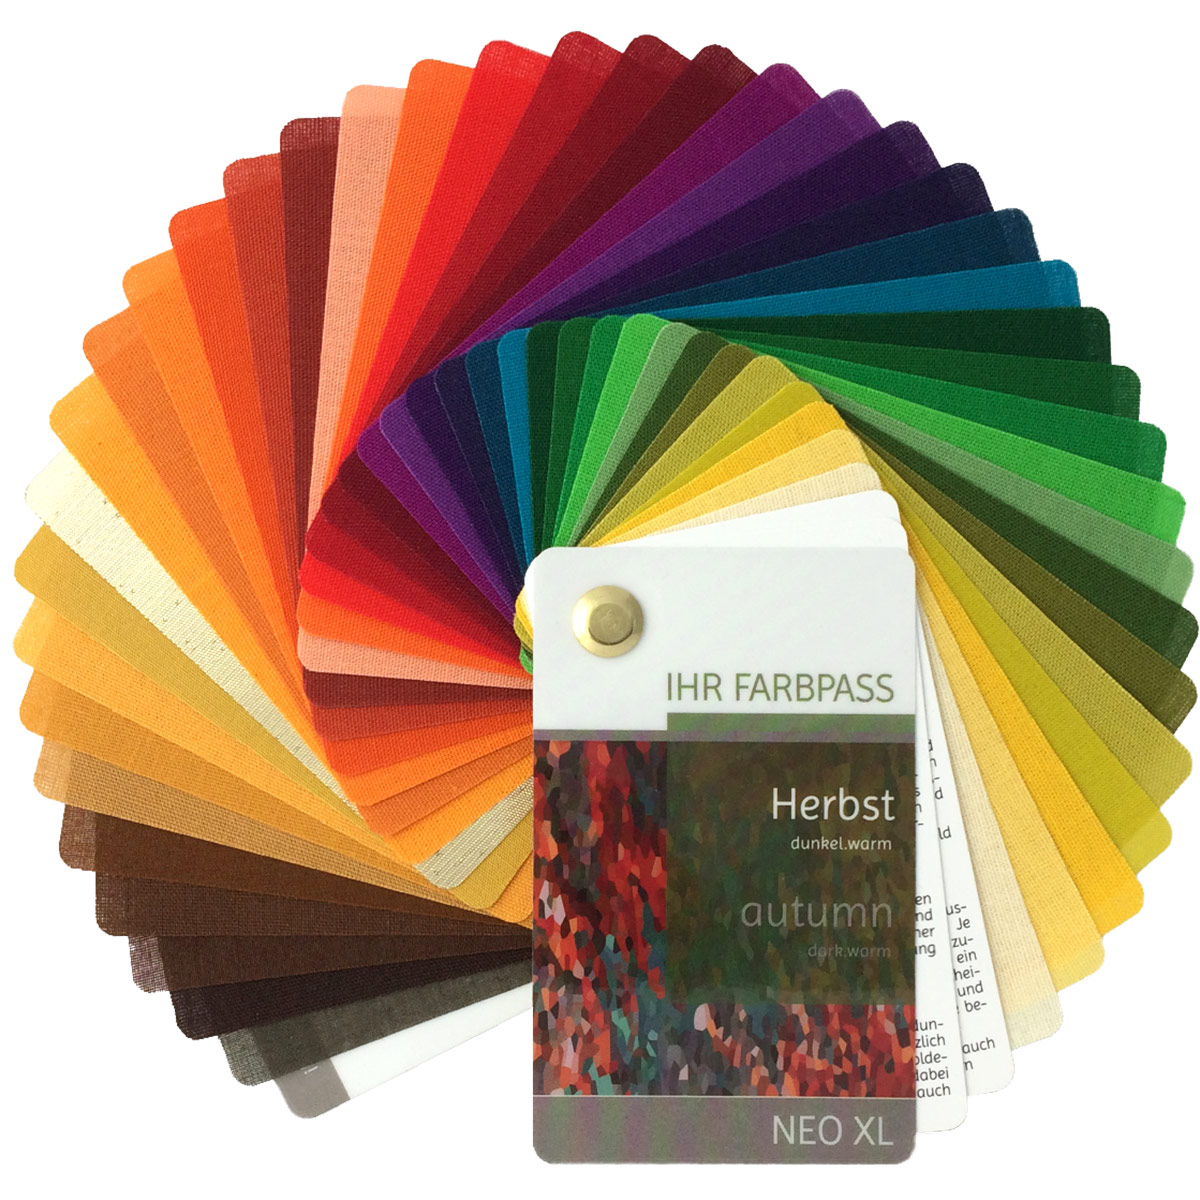 Farbpass Herbst - Neo XL, 40 Farben